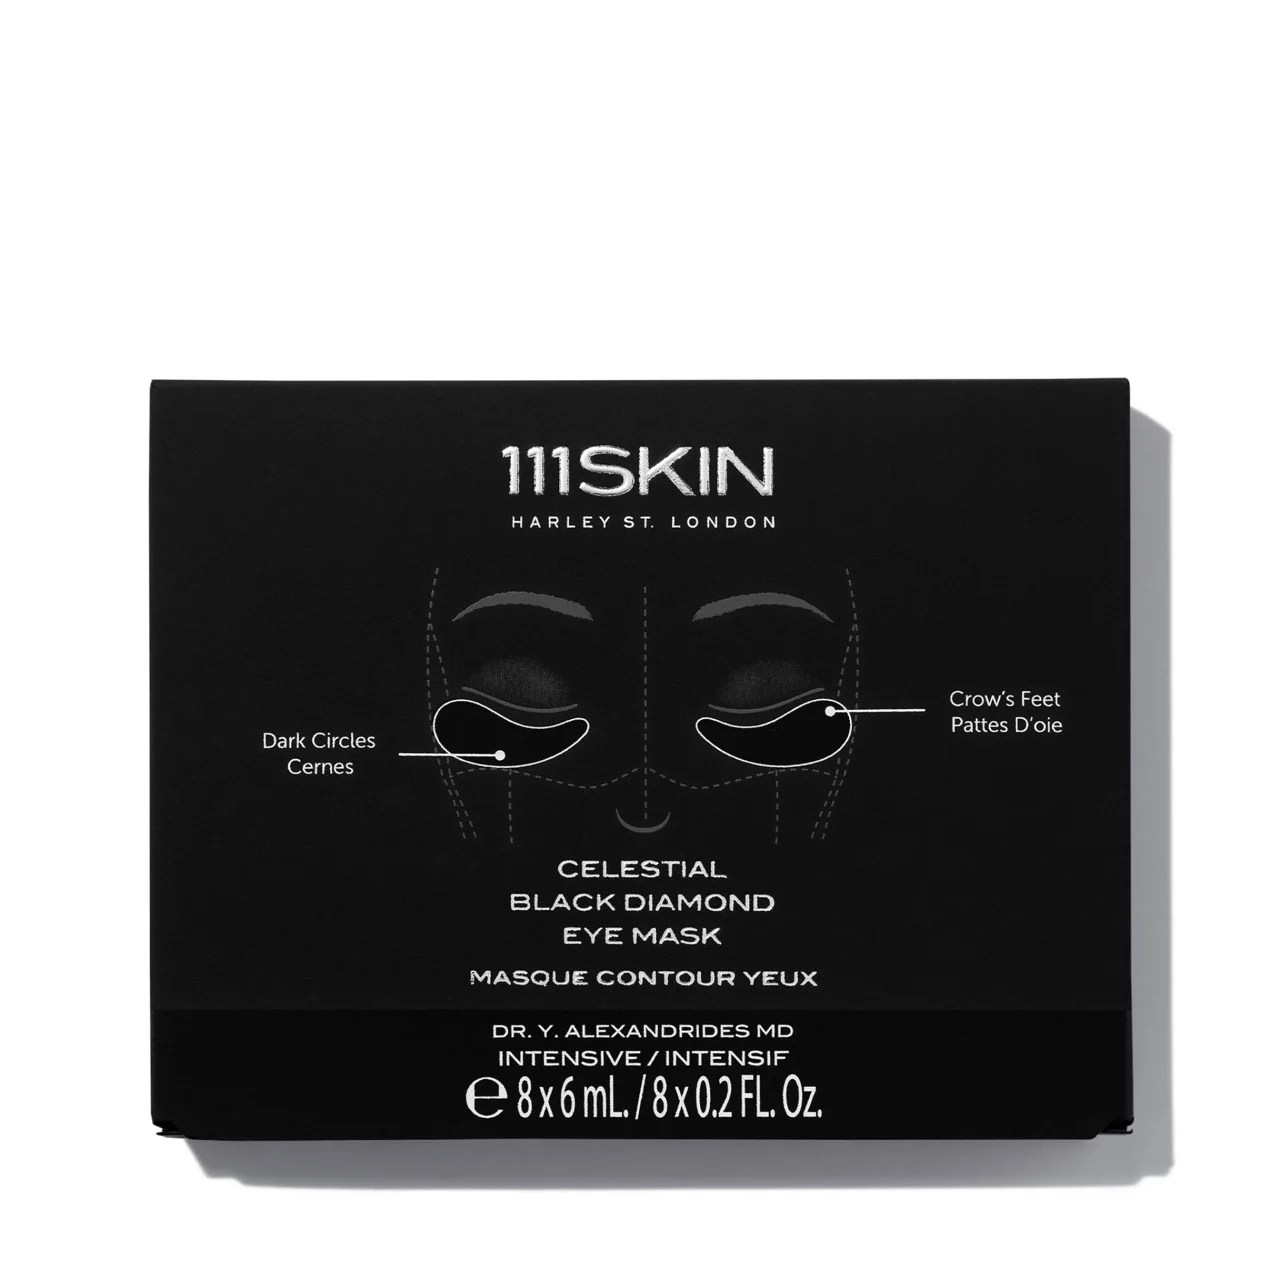 A box of 111Skin Celestial Black Diamond Eye Masks.